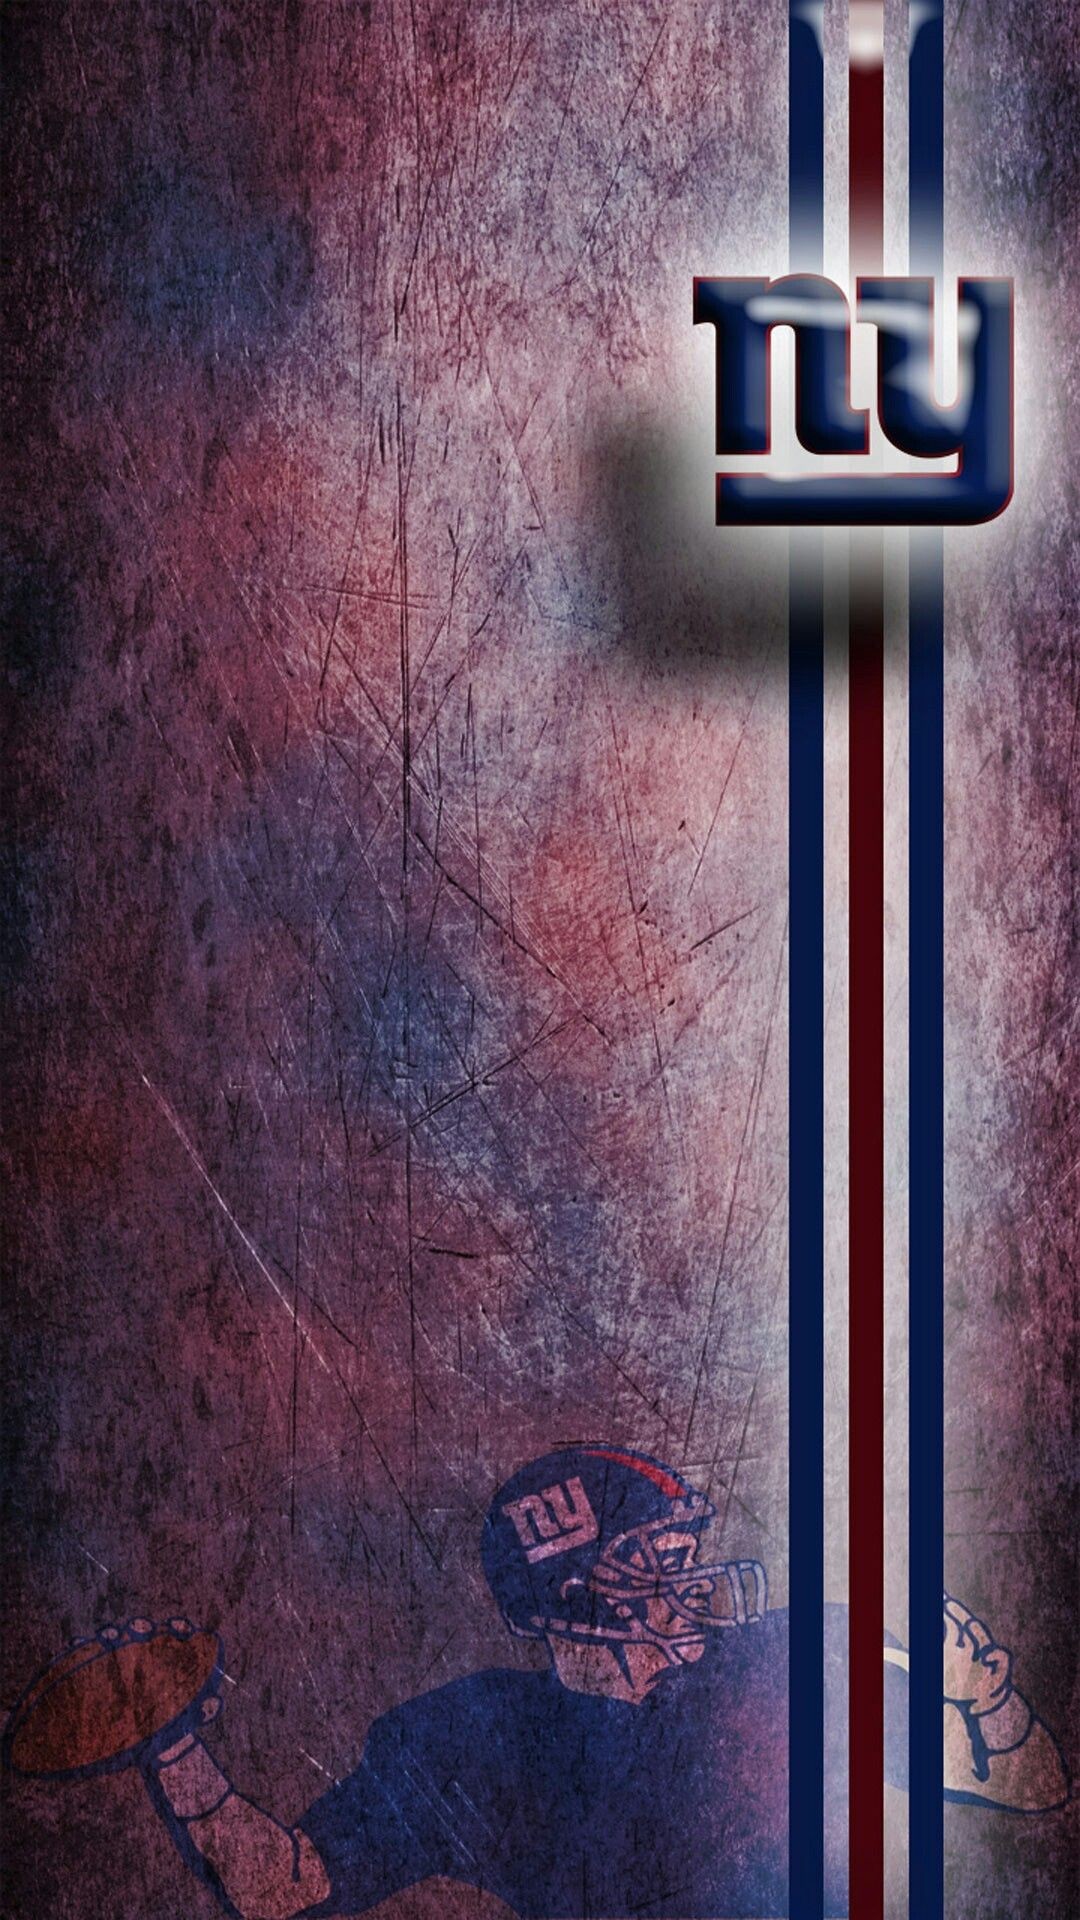 1080x1920 New York Giants wallpaper.